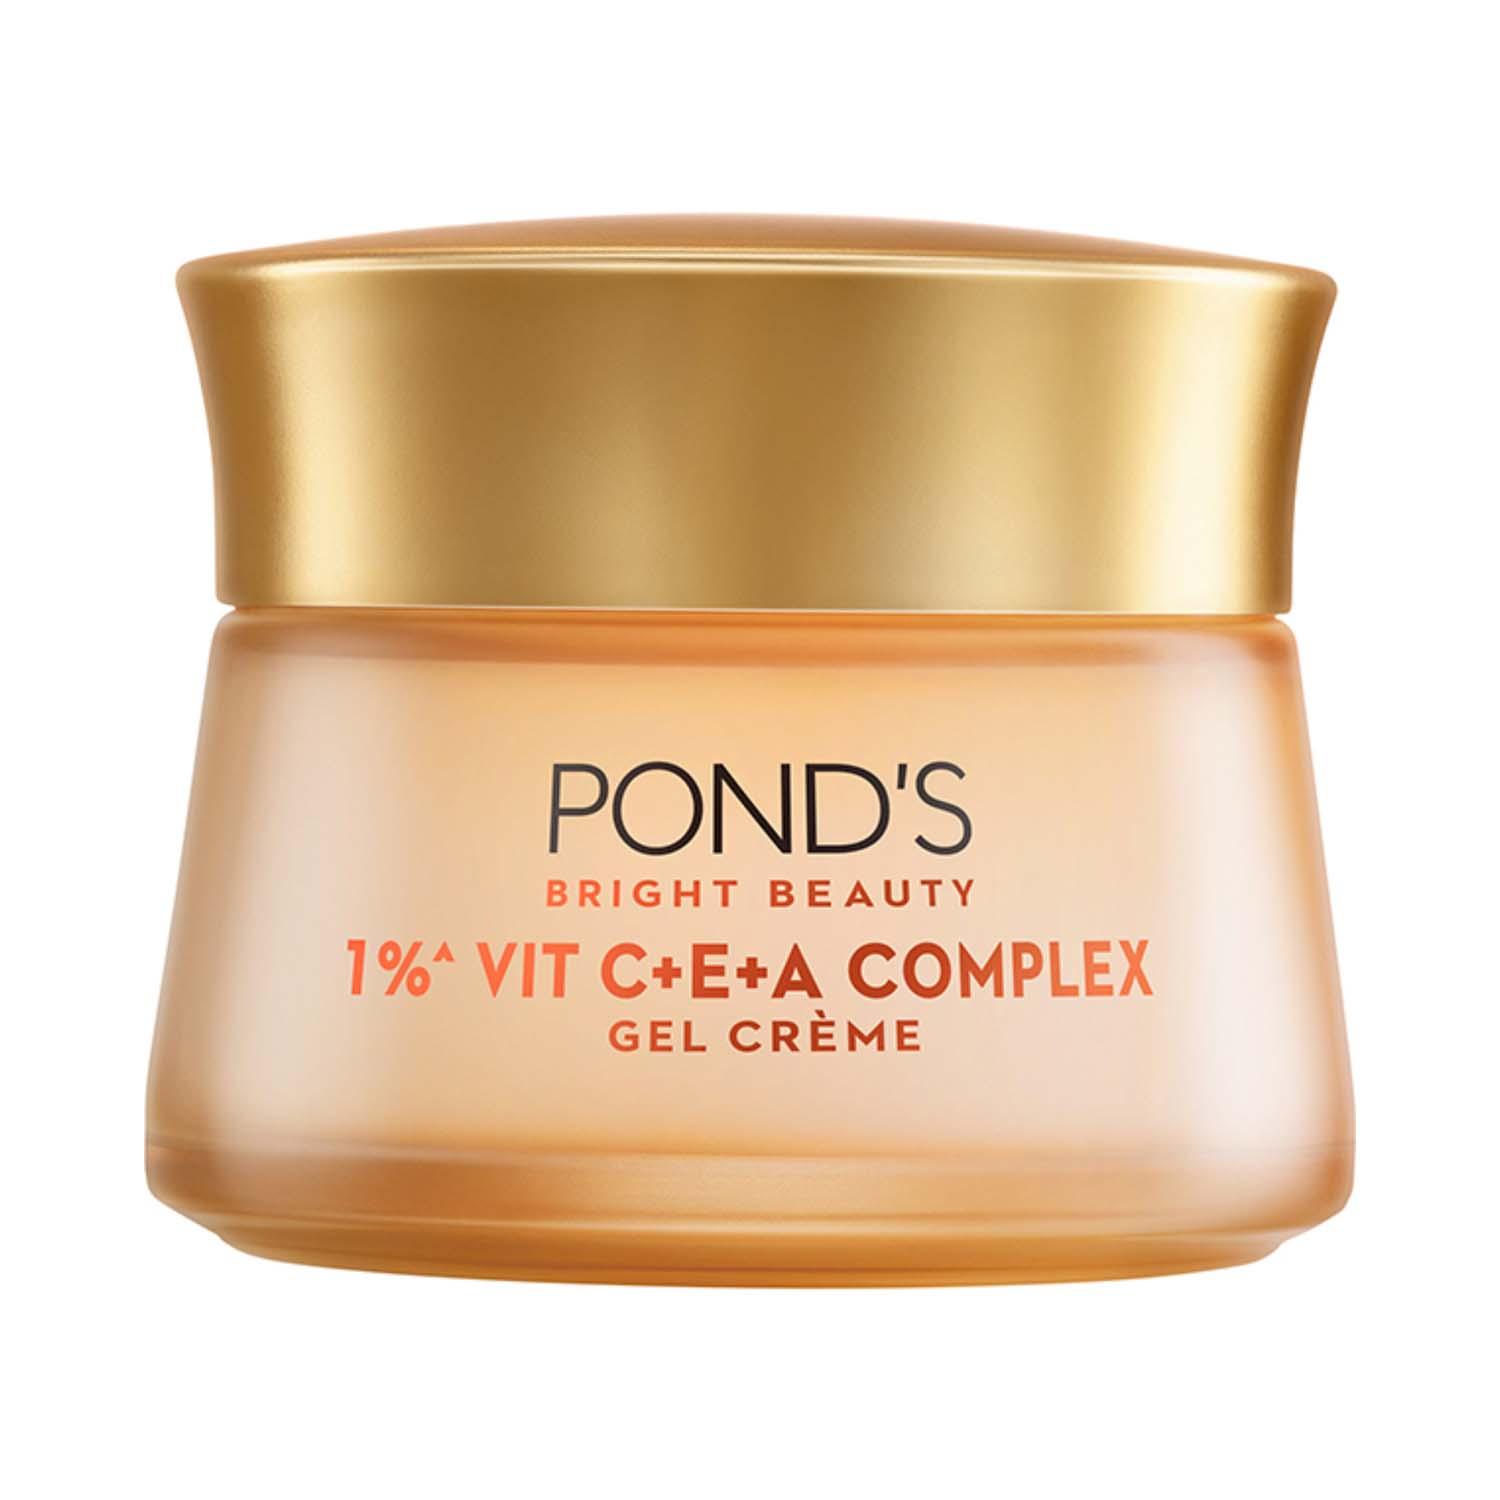 Pond's | Pond's Bright Beauty 1% Vit C+E+A Gel Creme (50 g)